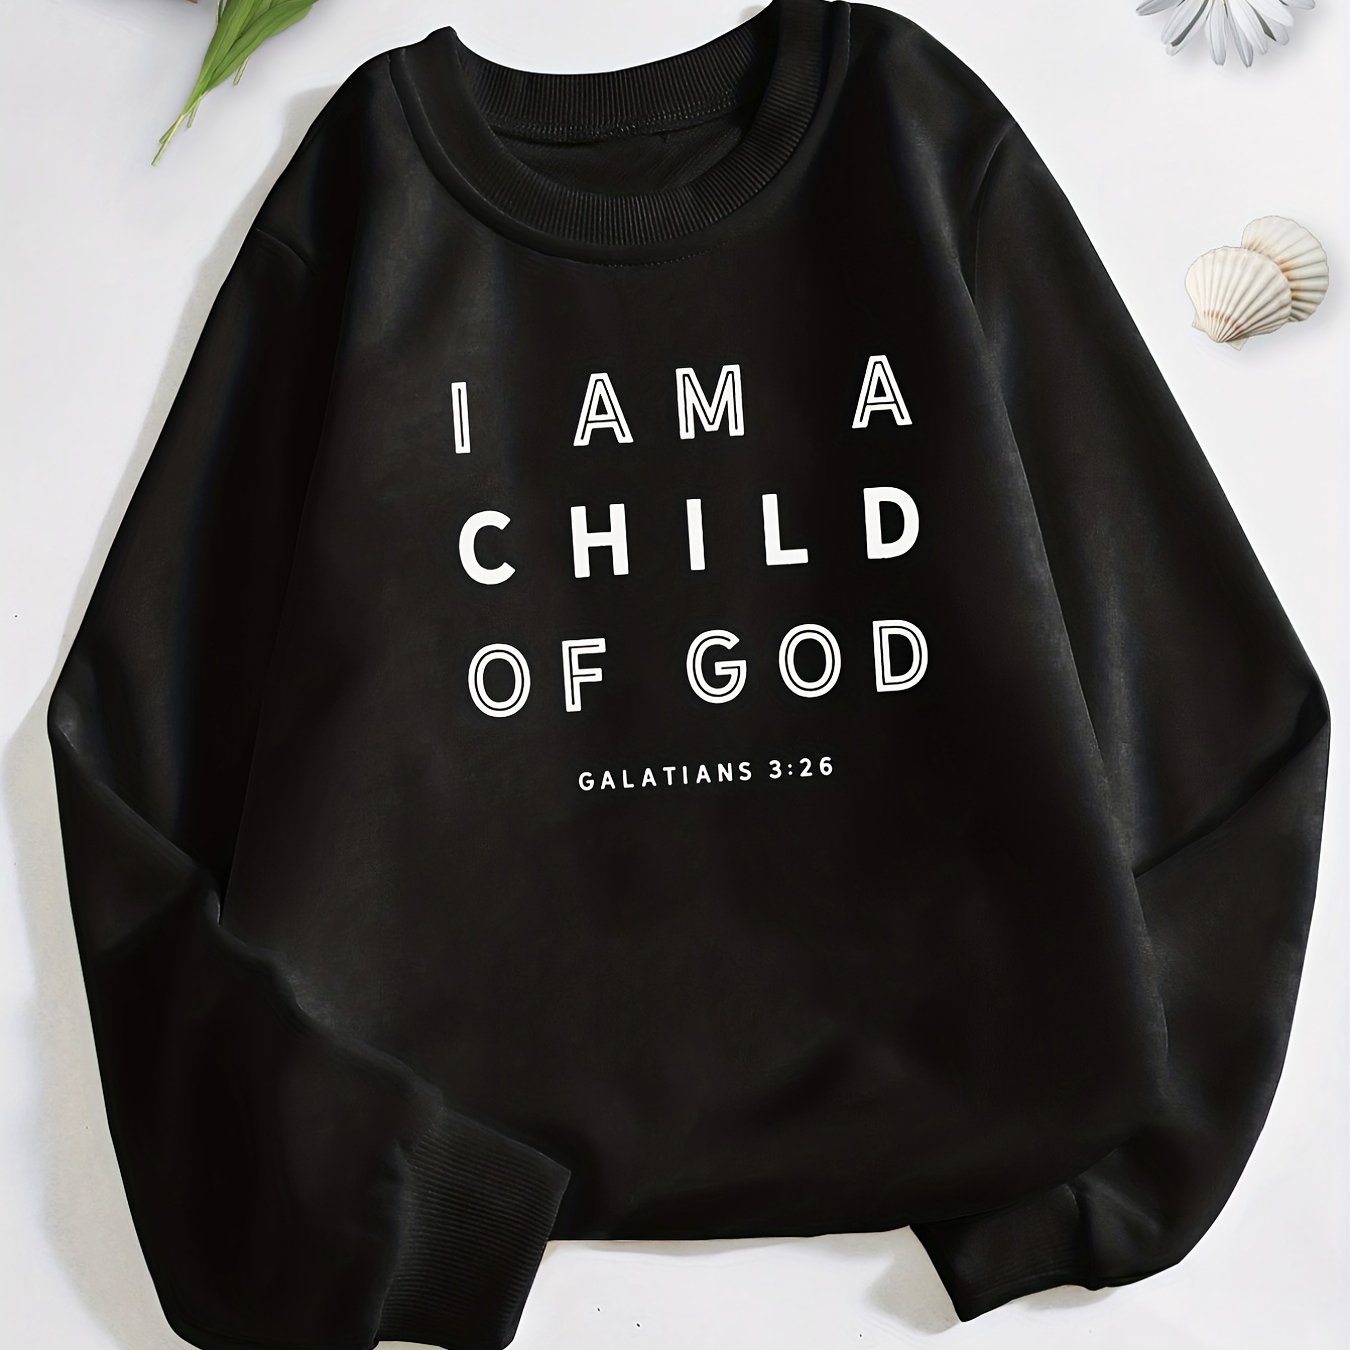 I AM A CHILD OF GOD Youth Christian Pullover Sweatshirt claimedbygoddesigns